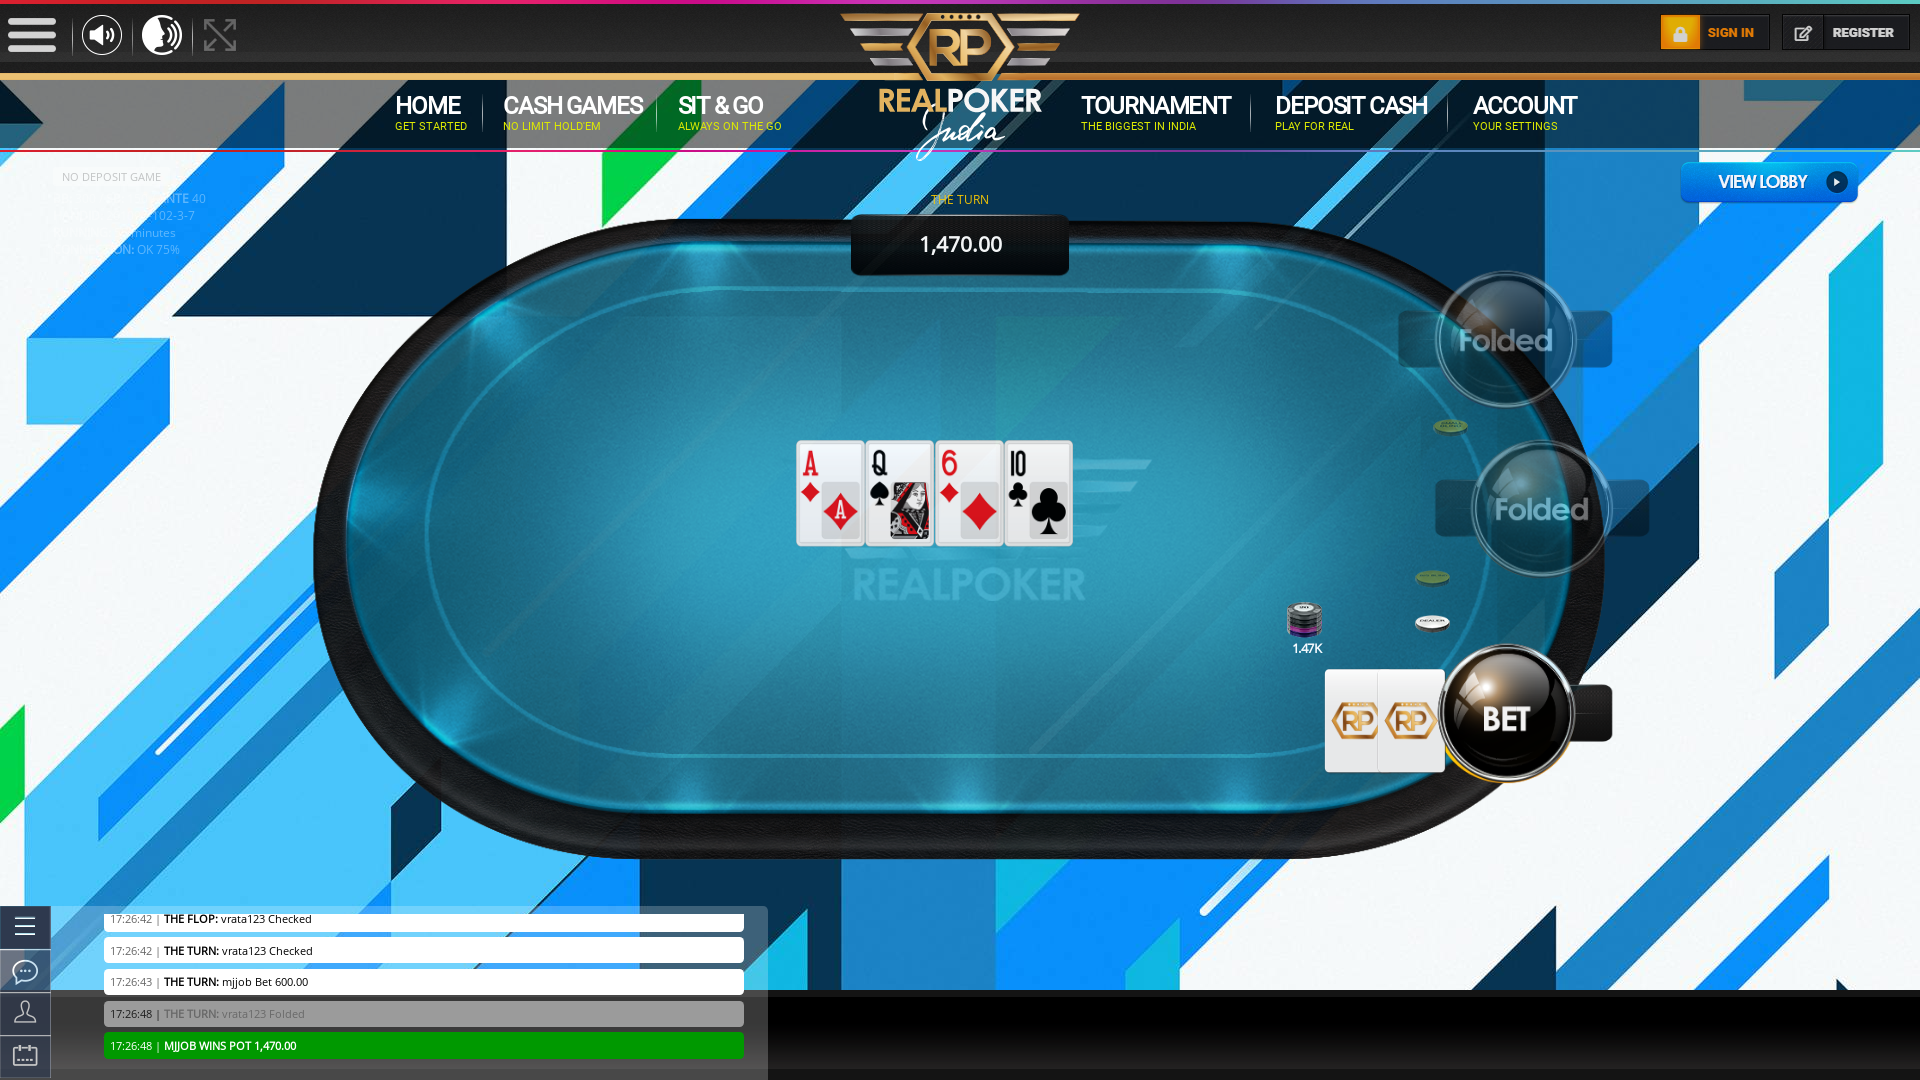 vrata123 playing some superb high risk poker hands